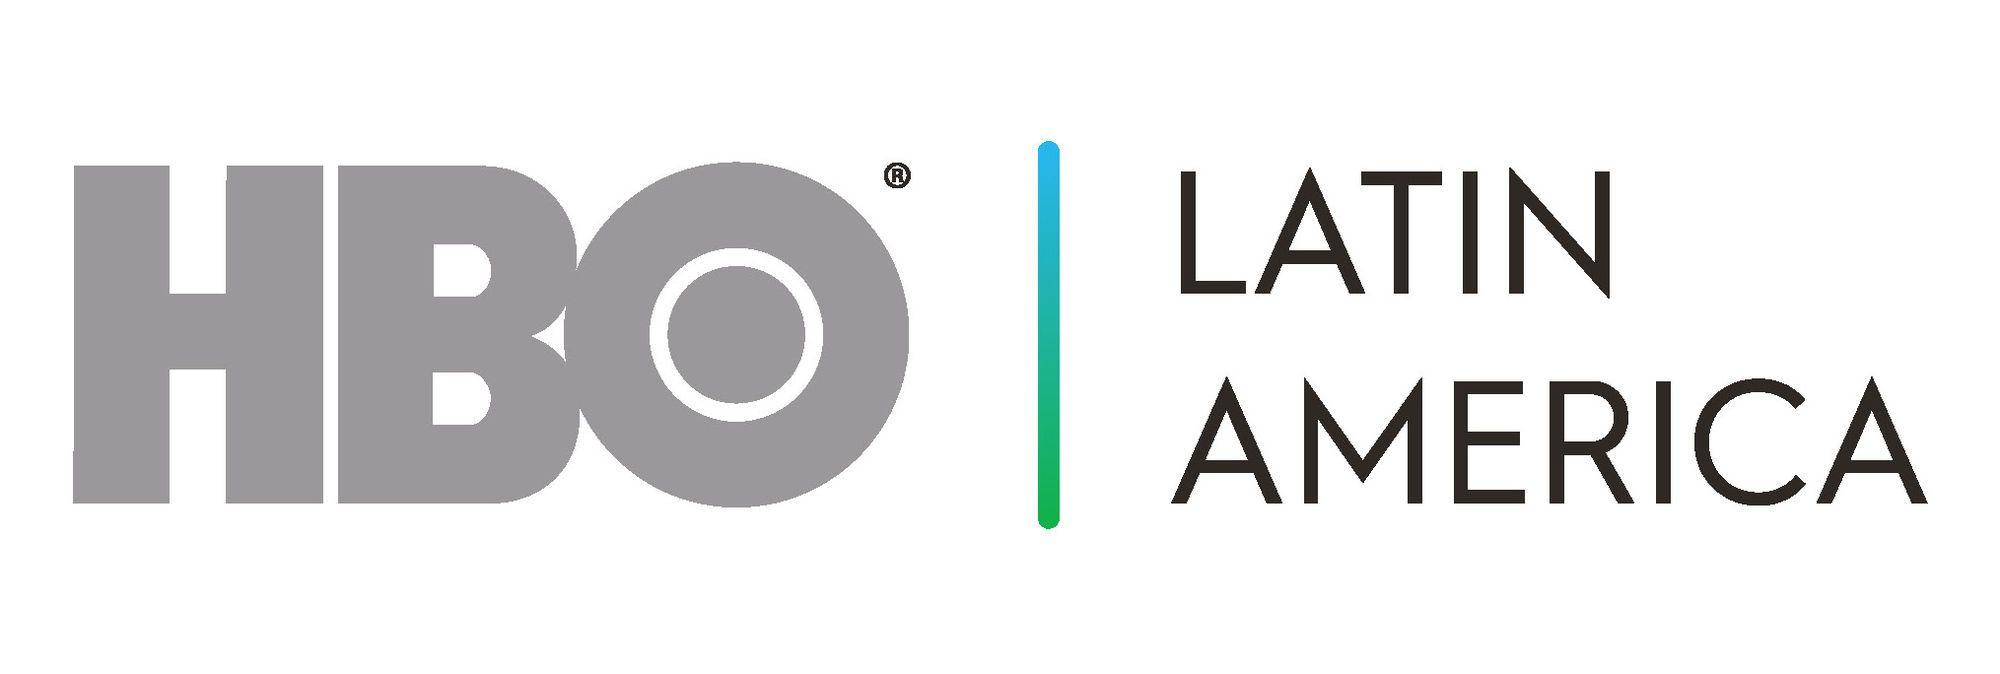 Latin America Logo - HBO Latin America (Networks) | Logopedia | FANDOM powered by Wikia